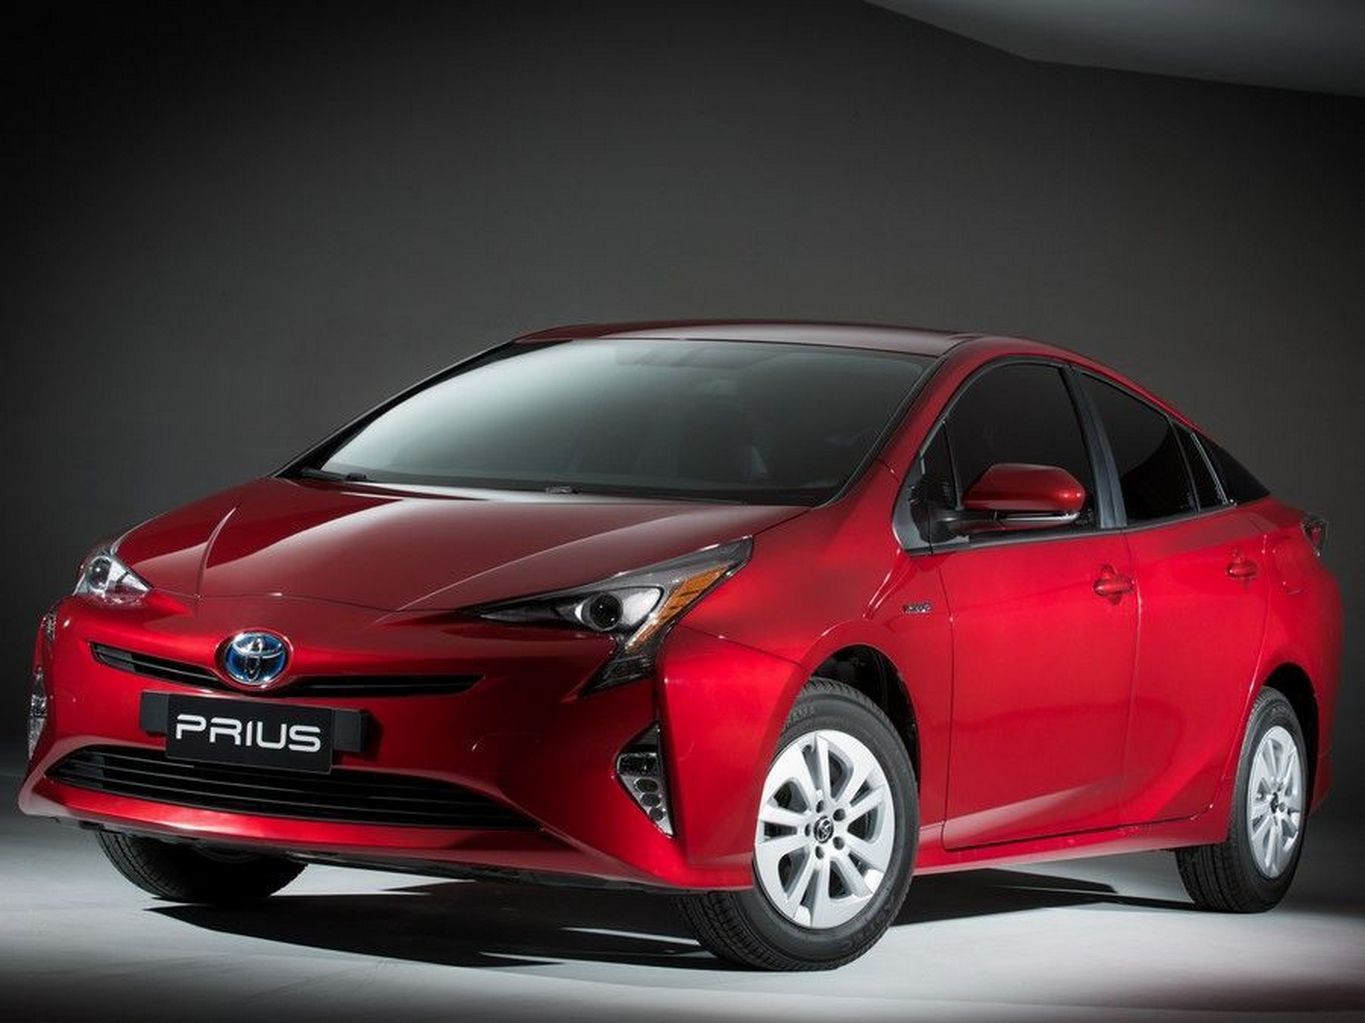 Carga de gás do ar - Toyota Prius (veículos leves)